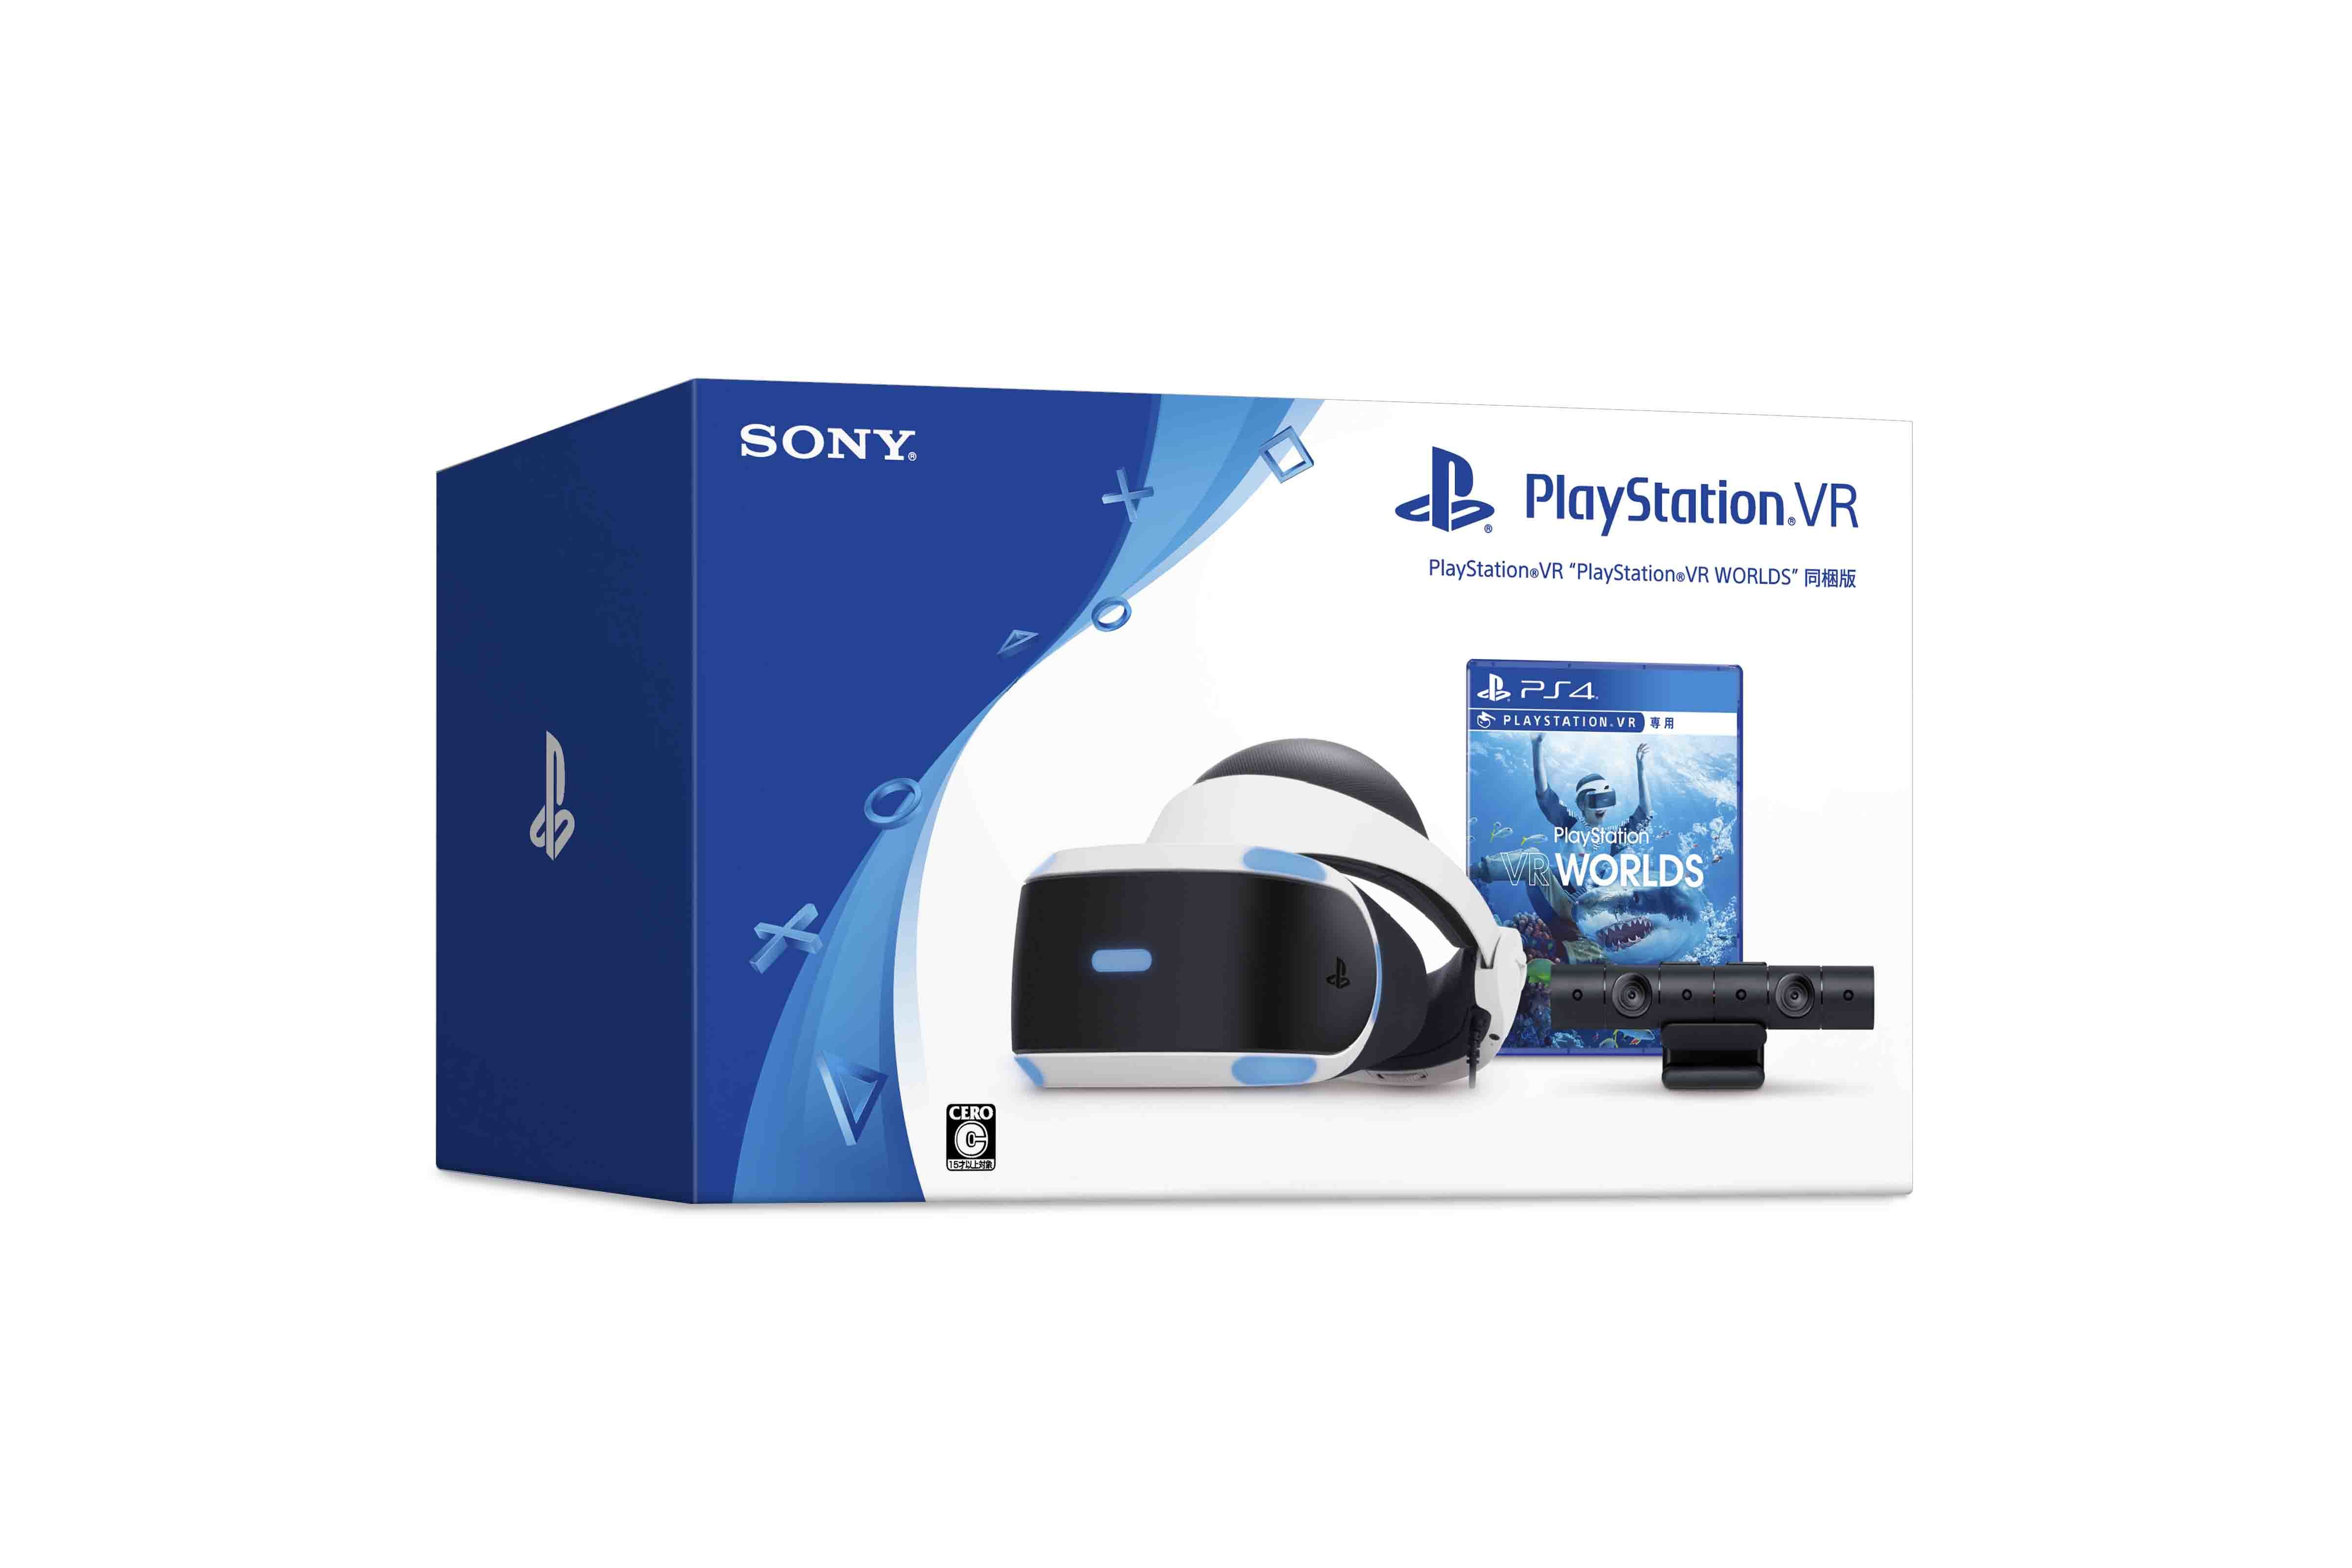 「PlayStation VR “PlayStation VR WORLDS” 同梱版」